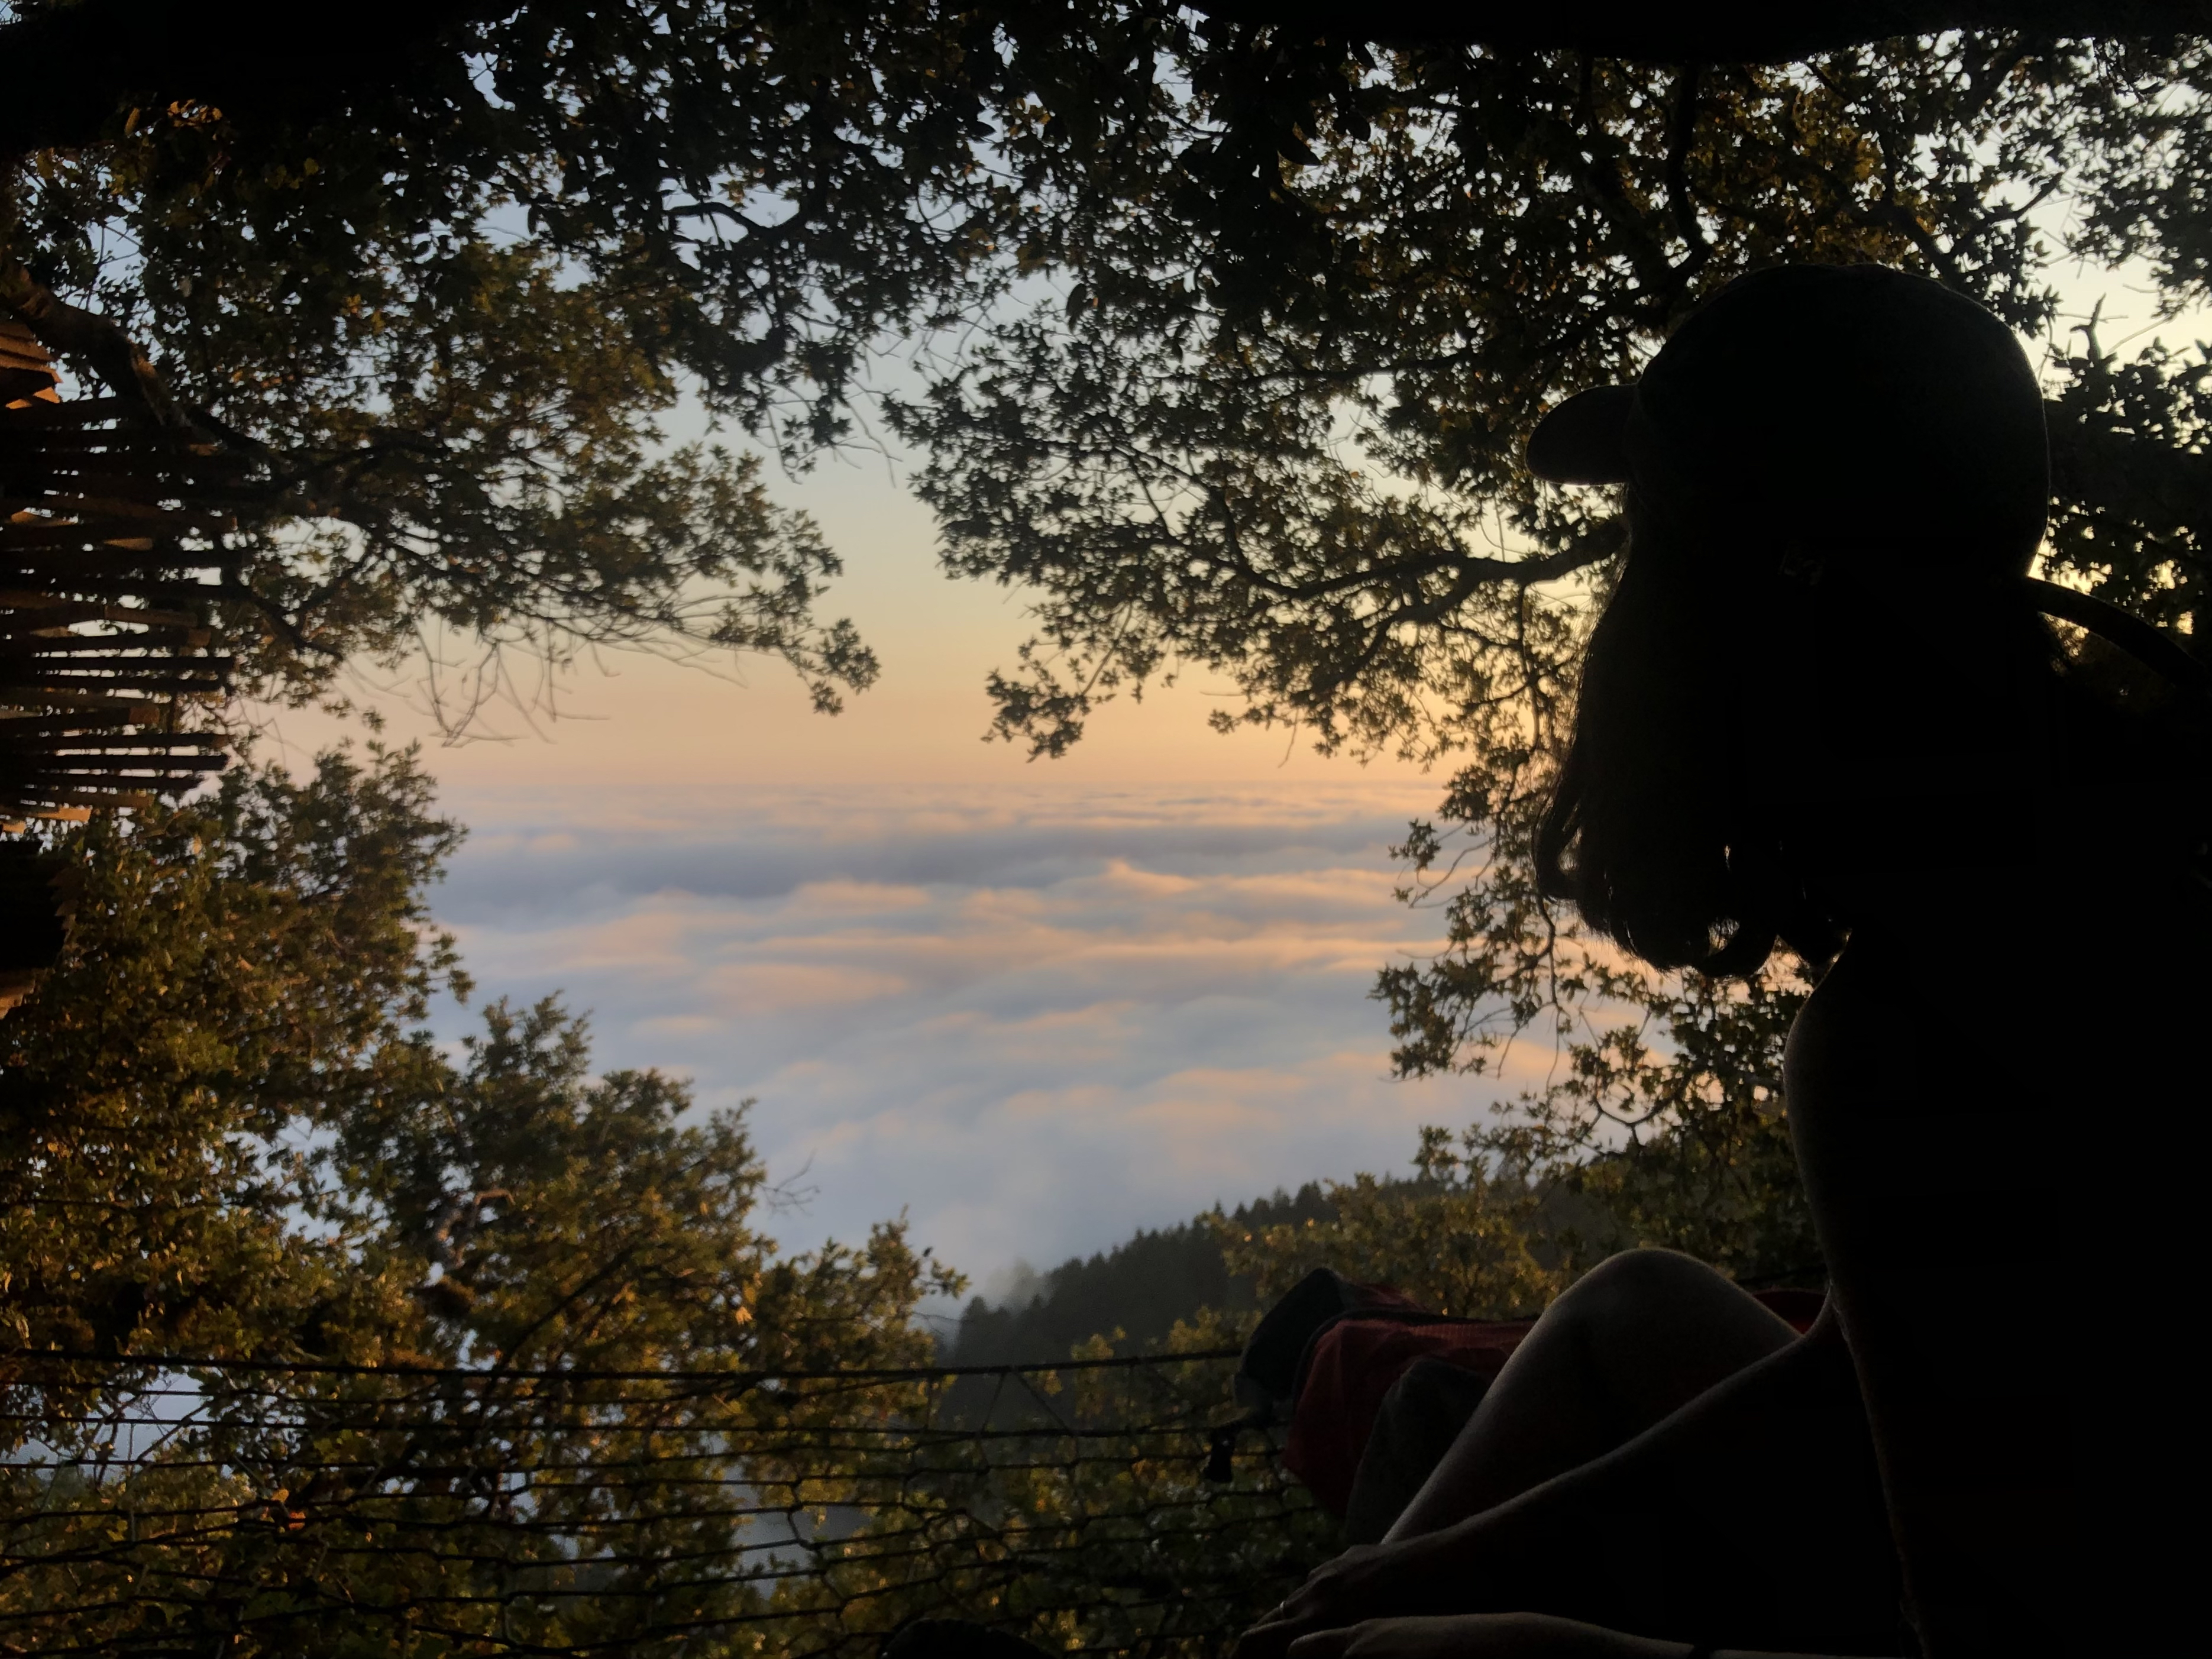 Secret Sky Hammocks on Mount Tamalpais Offer Dazzling Views of the Bay Area